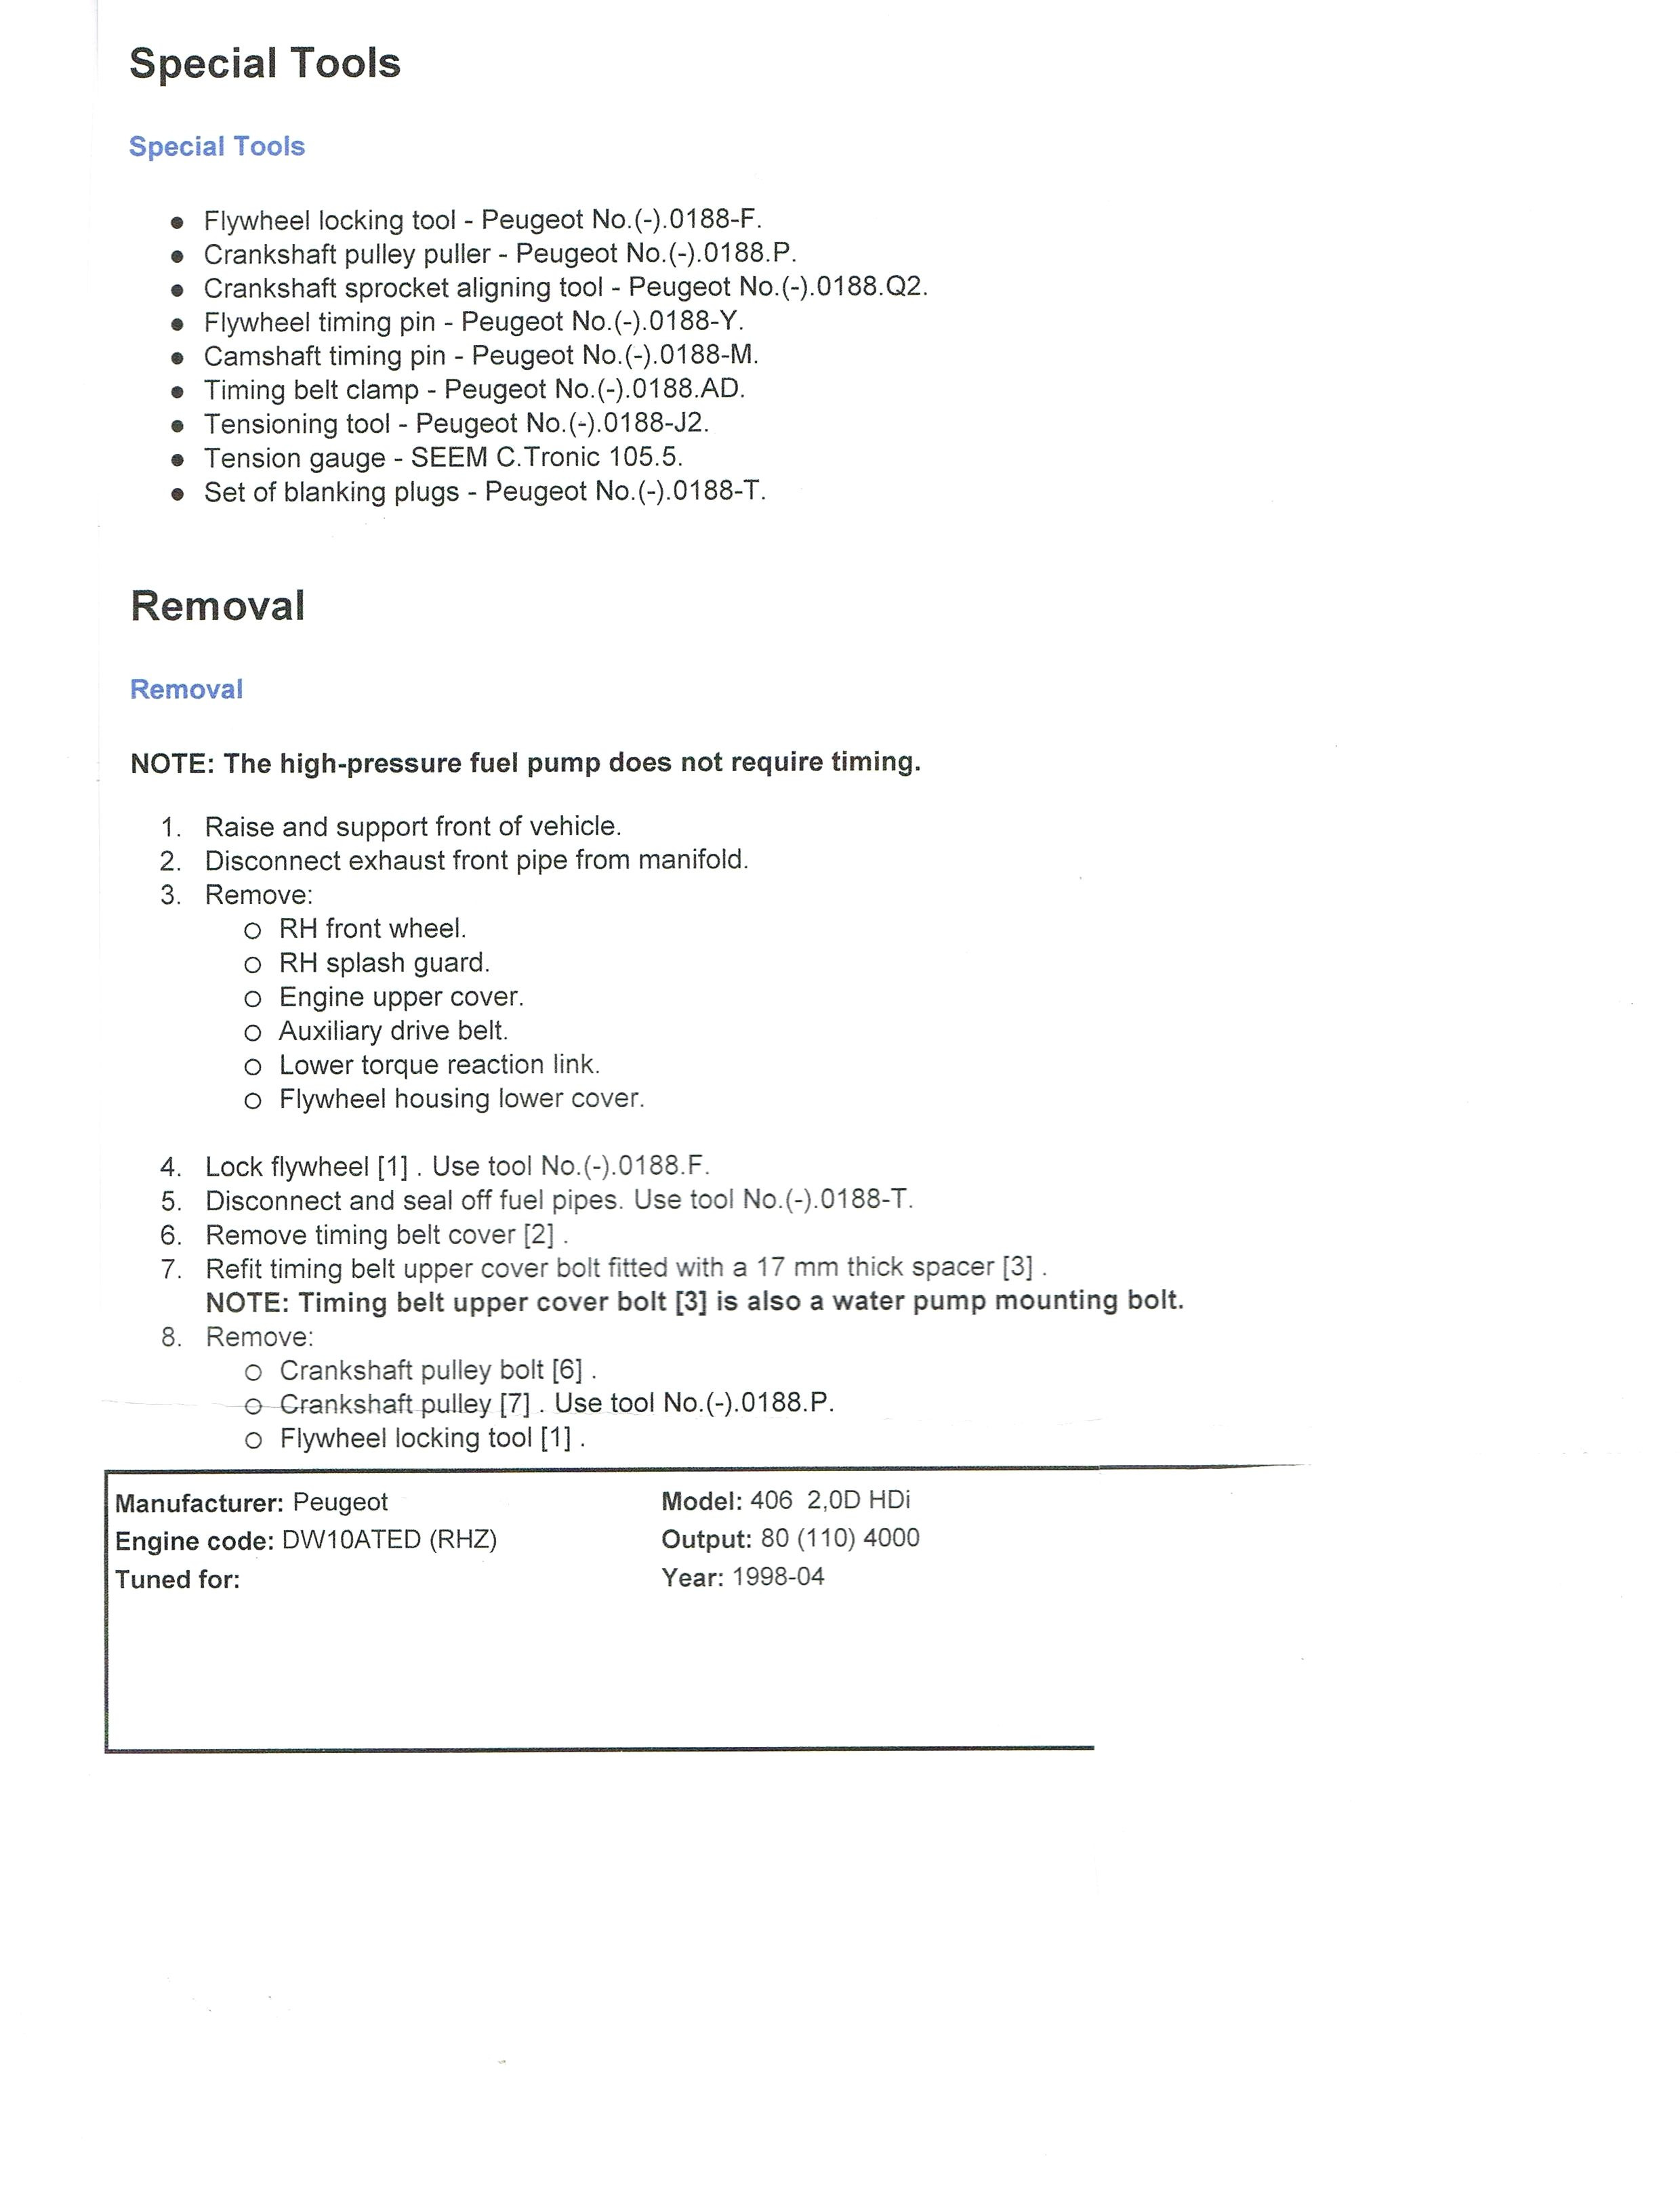 Resume Profile Examples Skills Profile Resume New Profile Resume Examples Resume Profile Examples For Students Of Skills Profile Resume resume profile examples|wikiresume.com